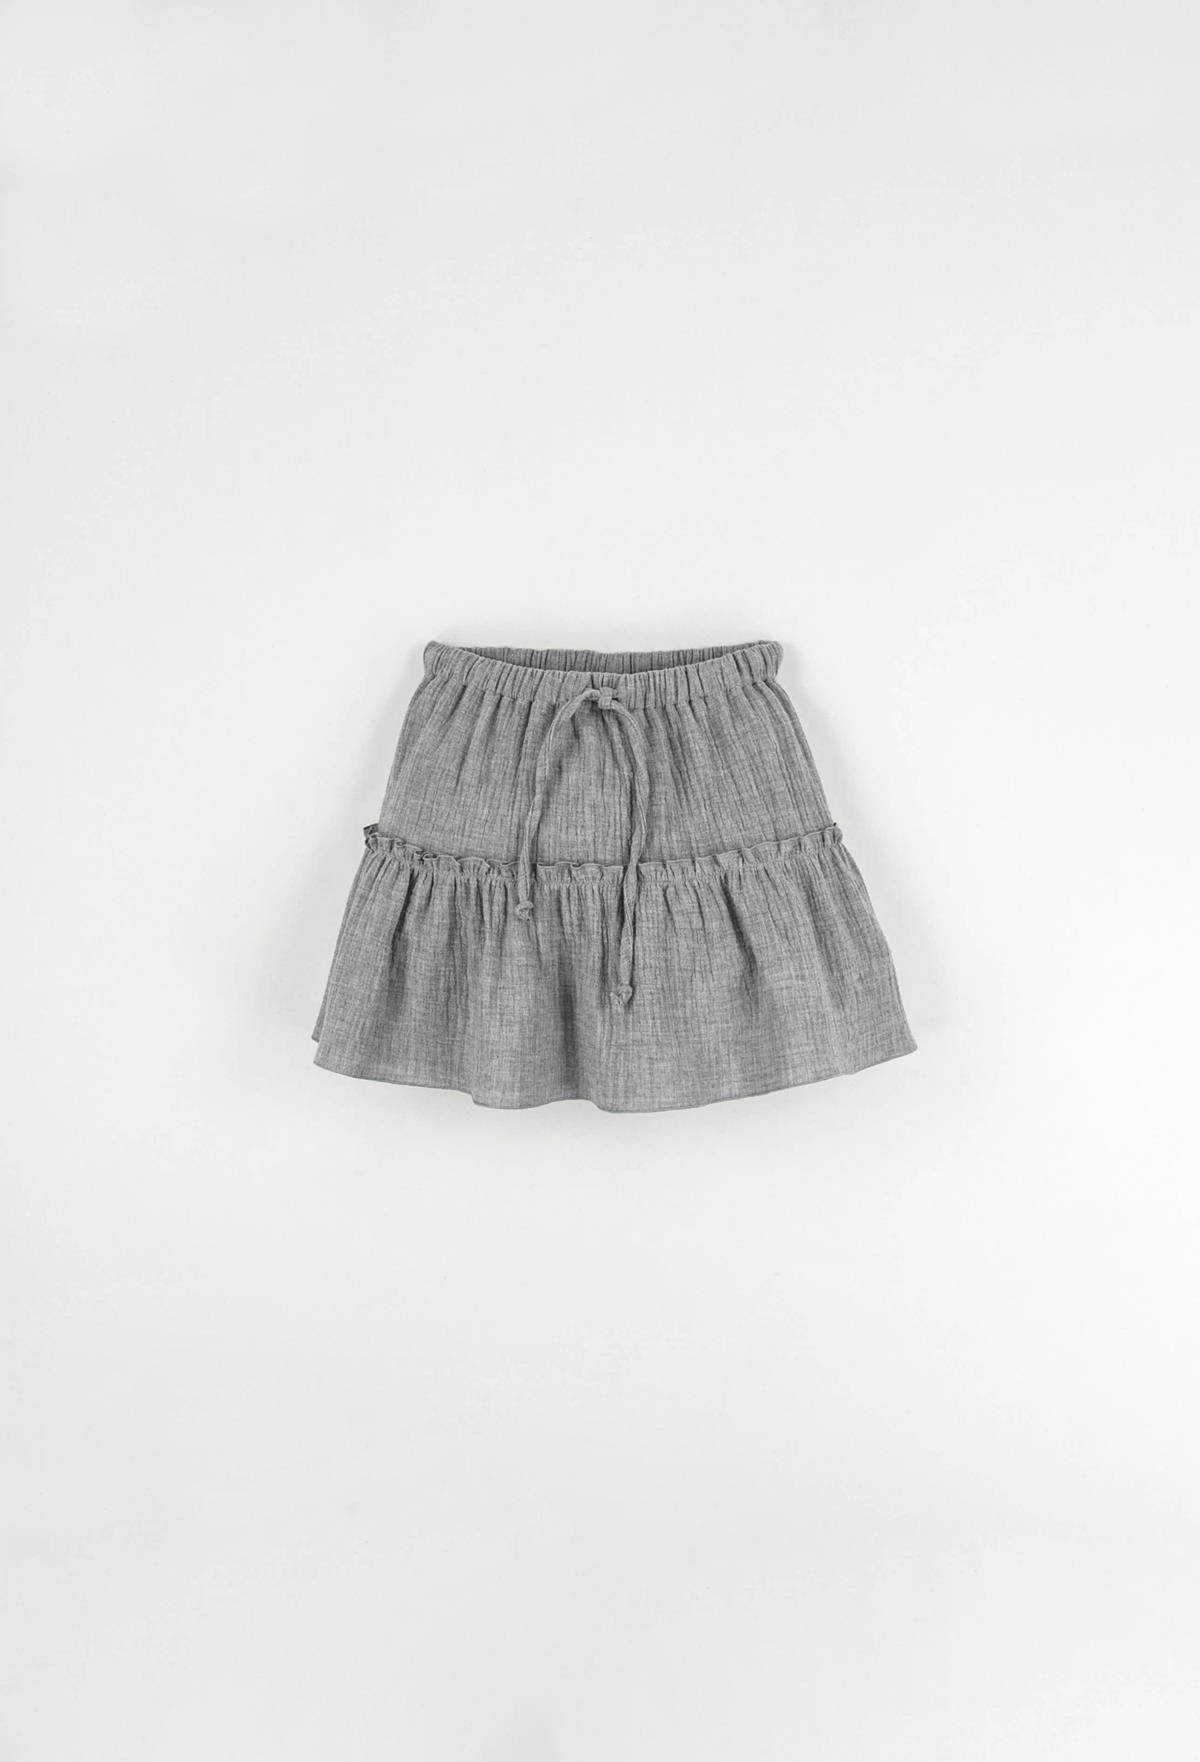 Mod.20.2 Light grey skirt with frill in organic fabric | AW22.23 Mod.20.2 Light grey skirt with frill in organic fabric